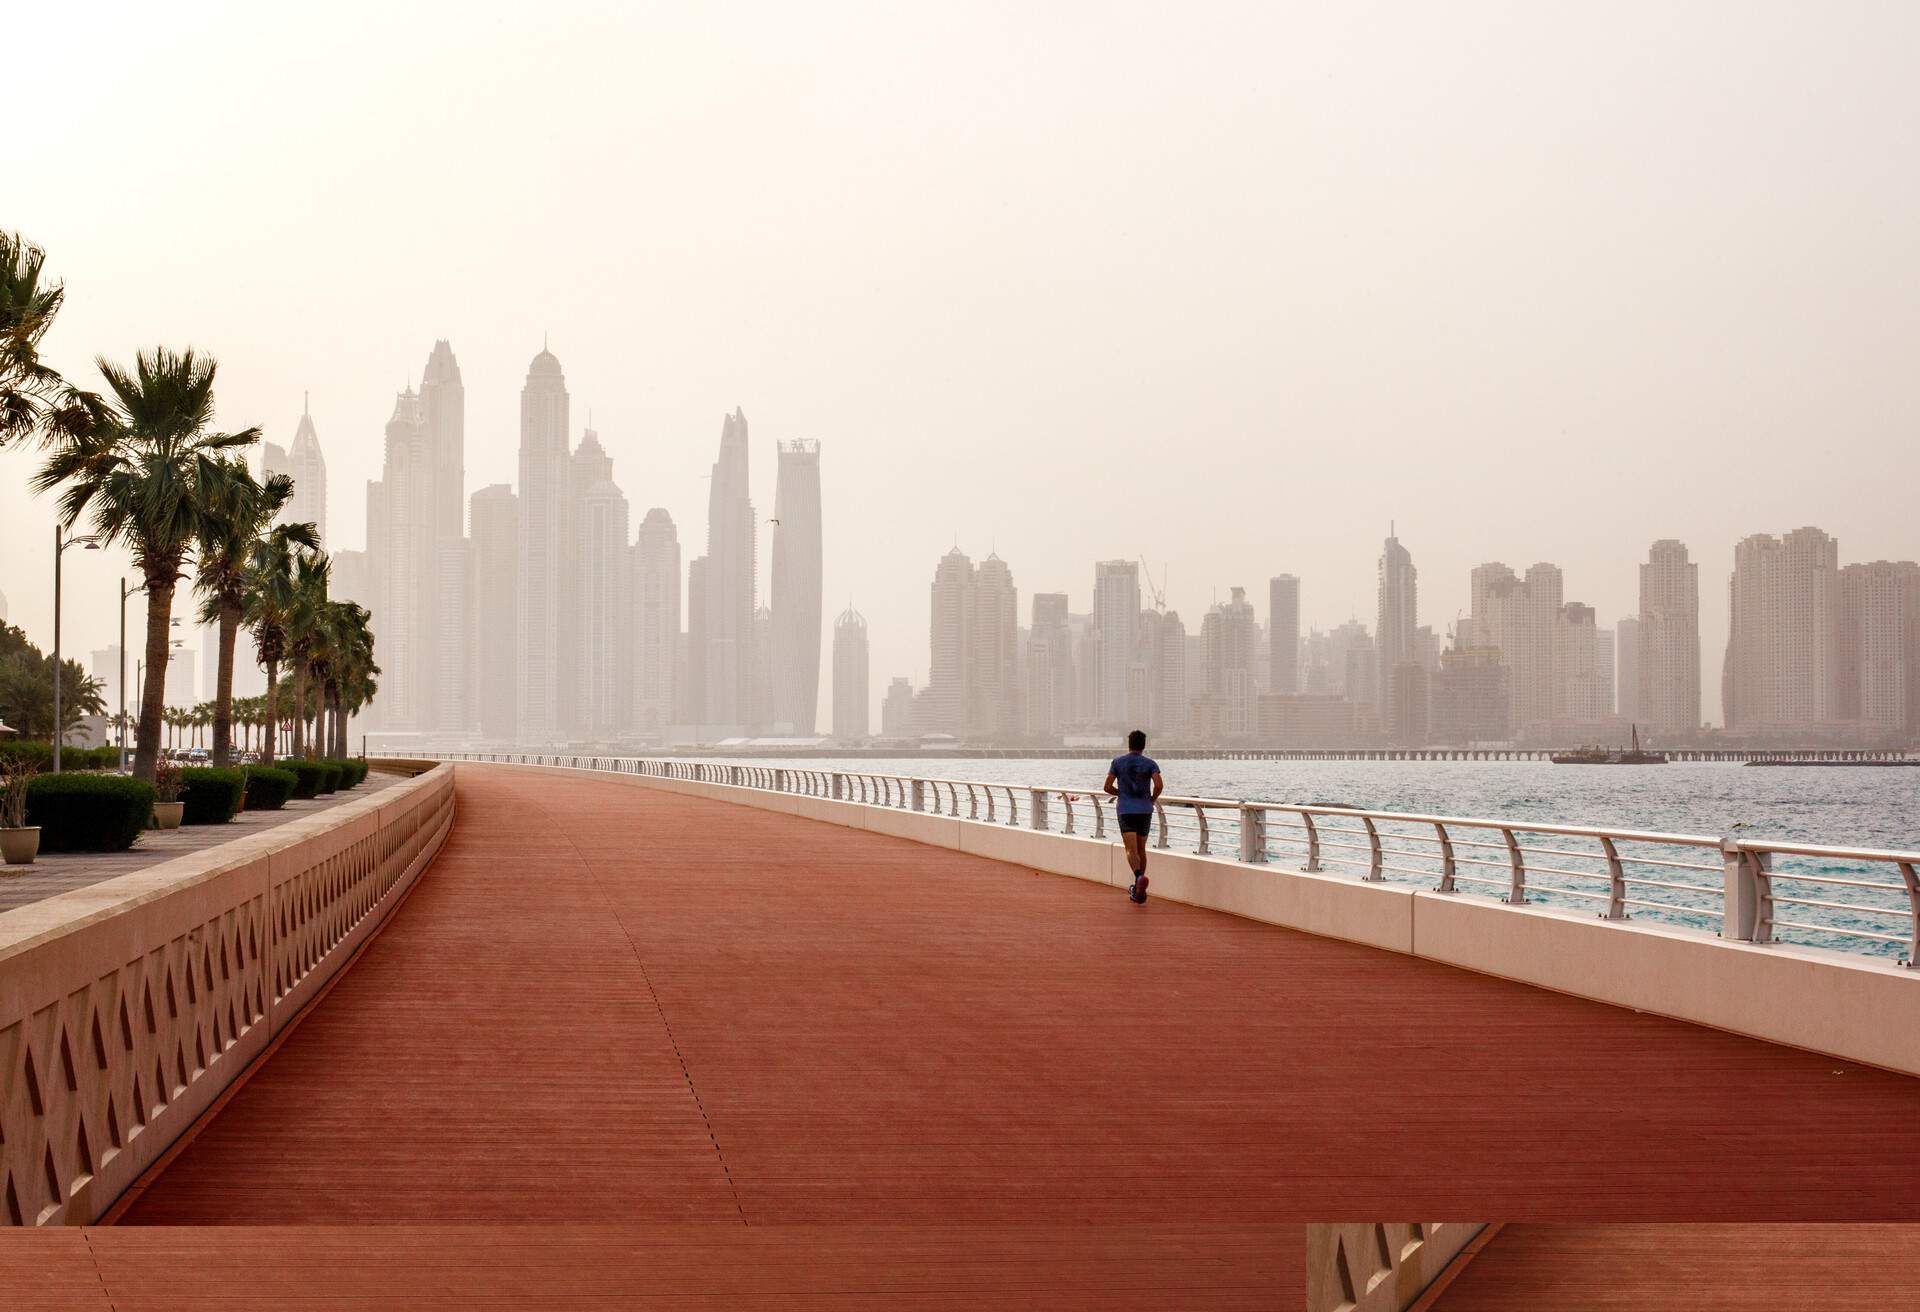 Morning run, a man runs along the road with a beautiful view of Dubai. UAE; Shutterstock ID 1354889051